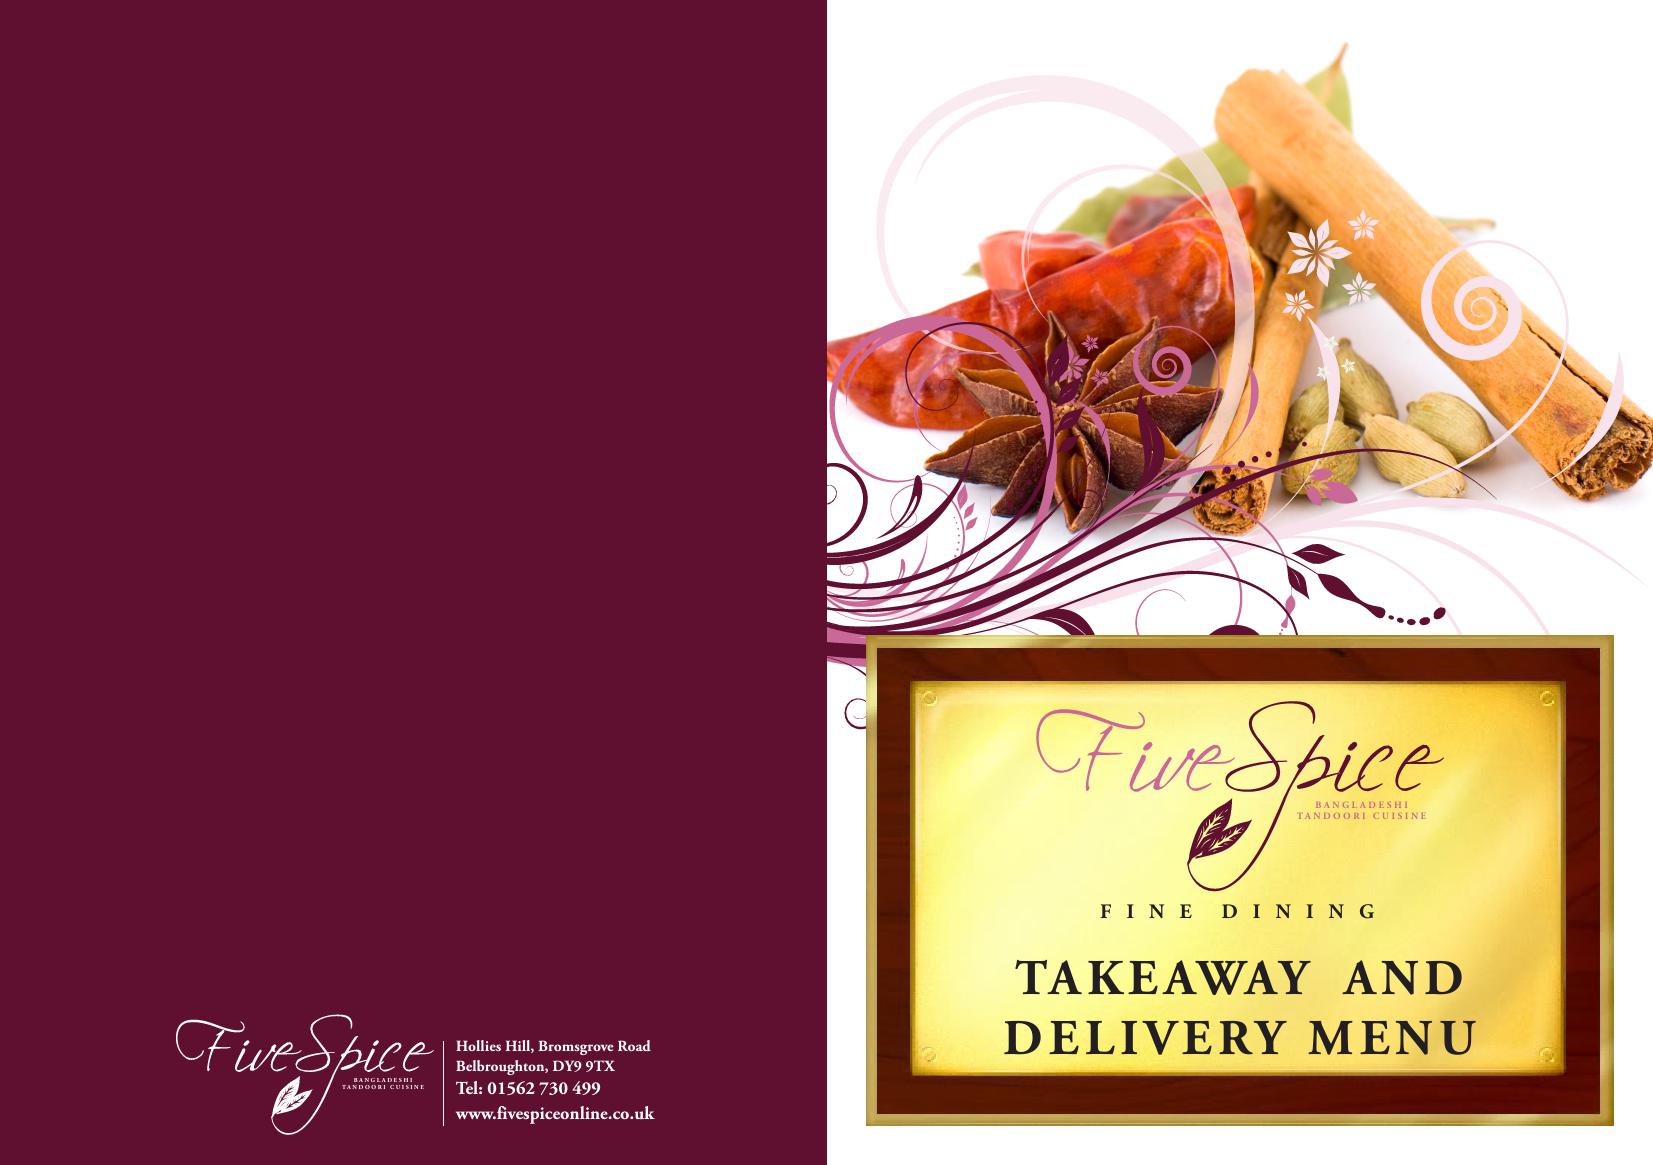 Five Spice Booklet Takeaway Menu 16 03 18 